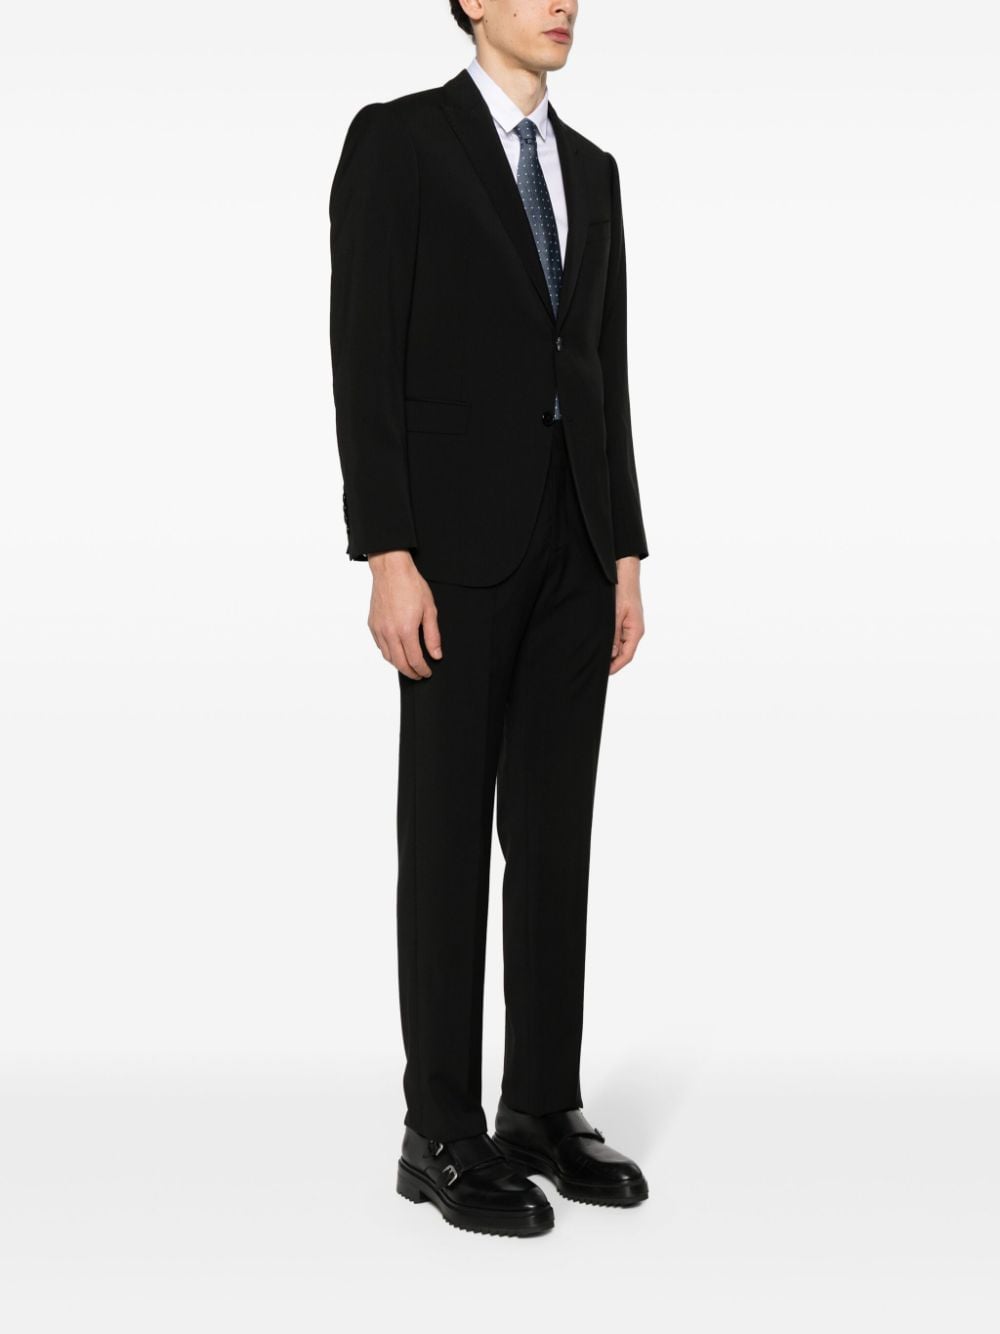 Emporio Armani Suit Black